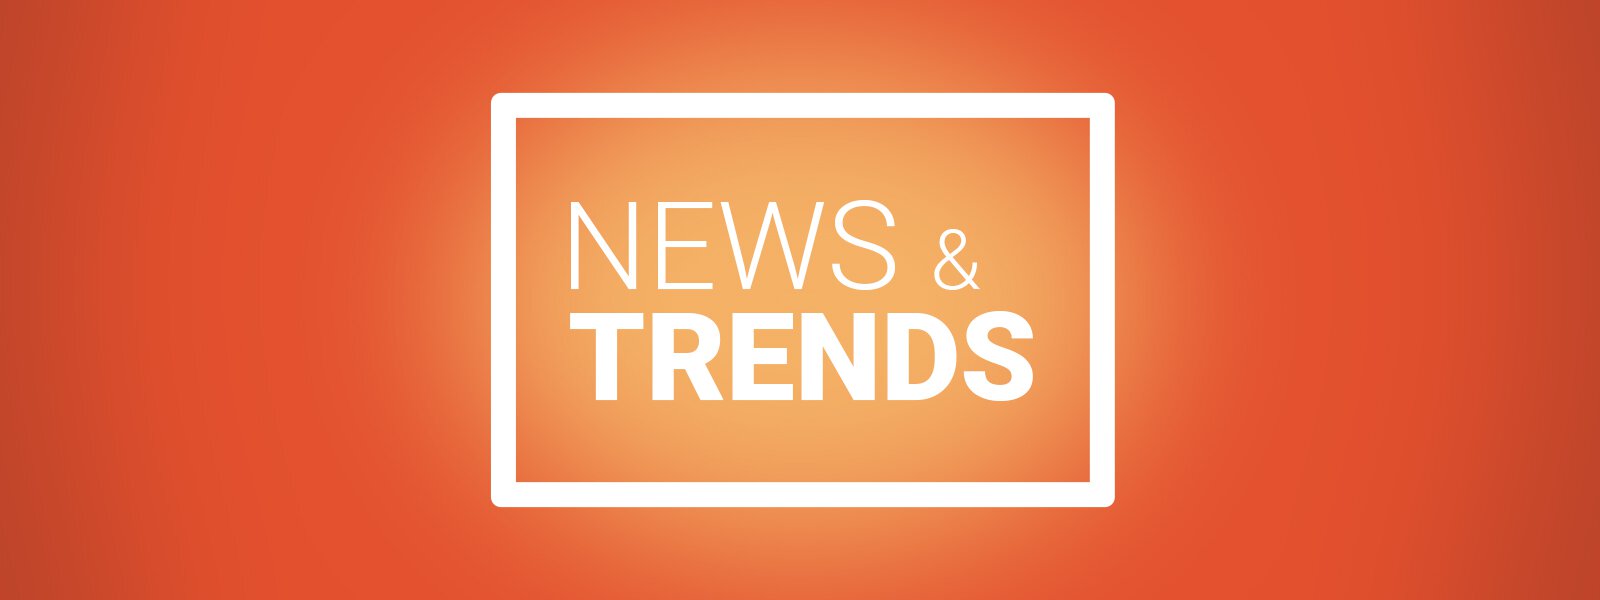 News & Trends